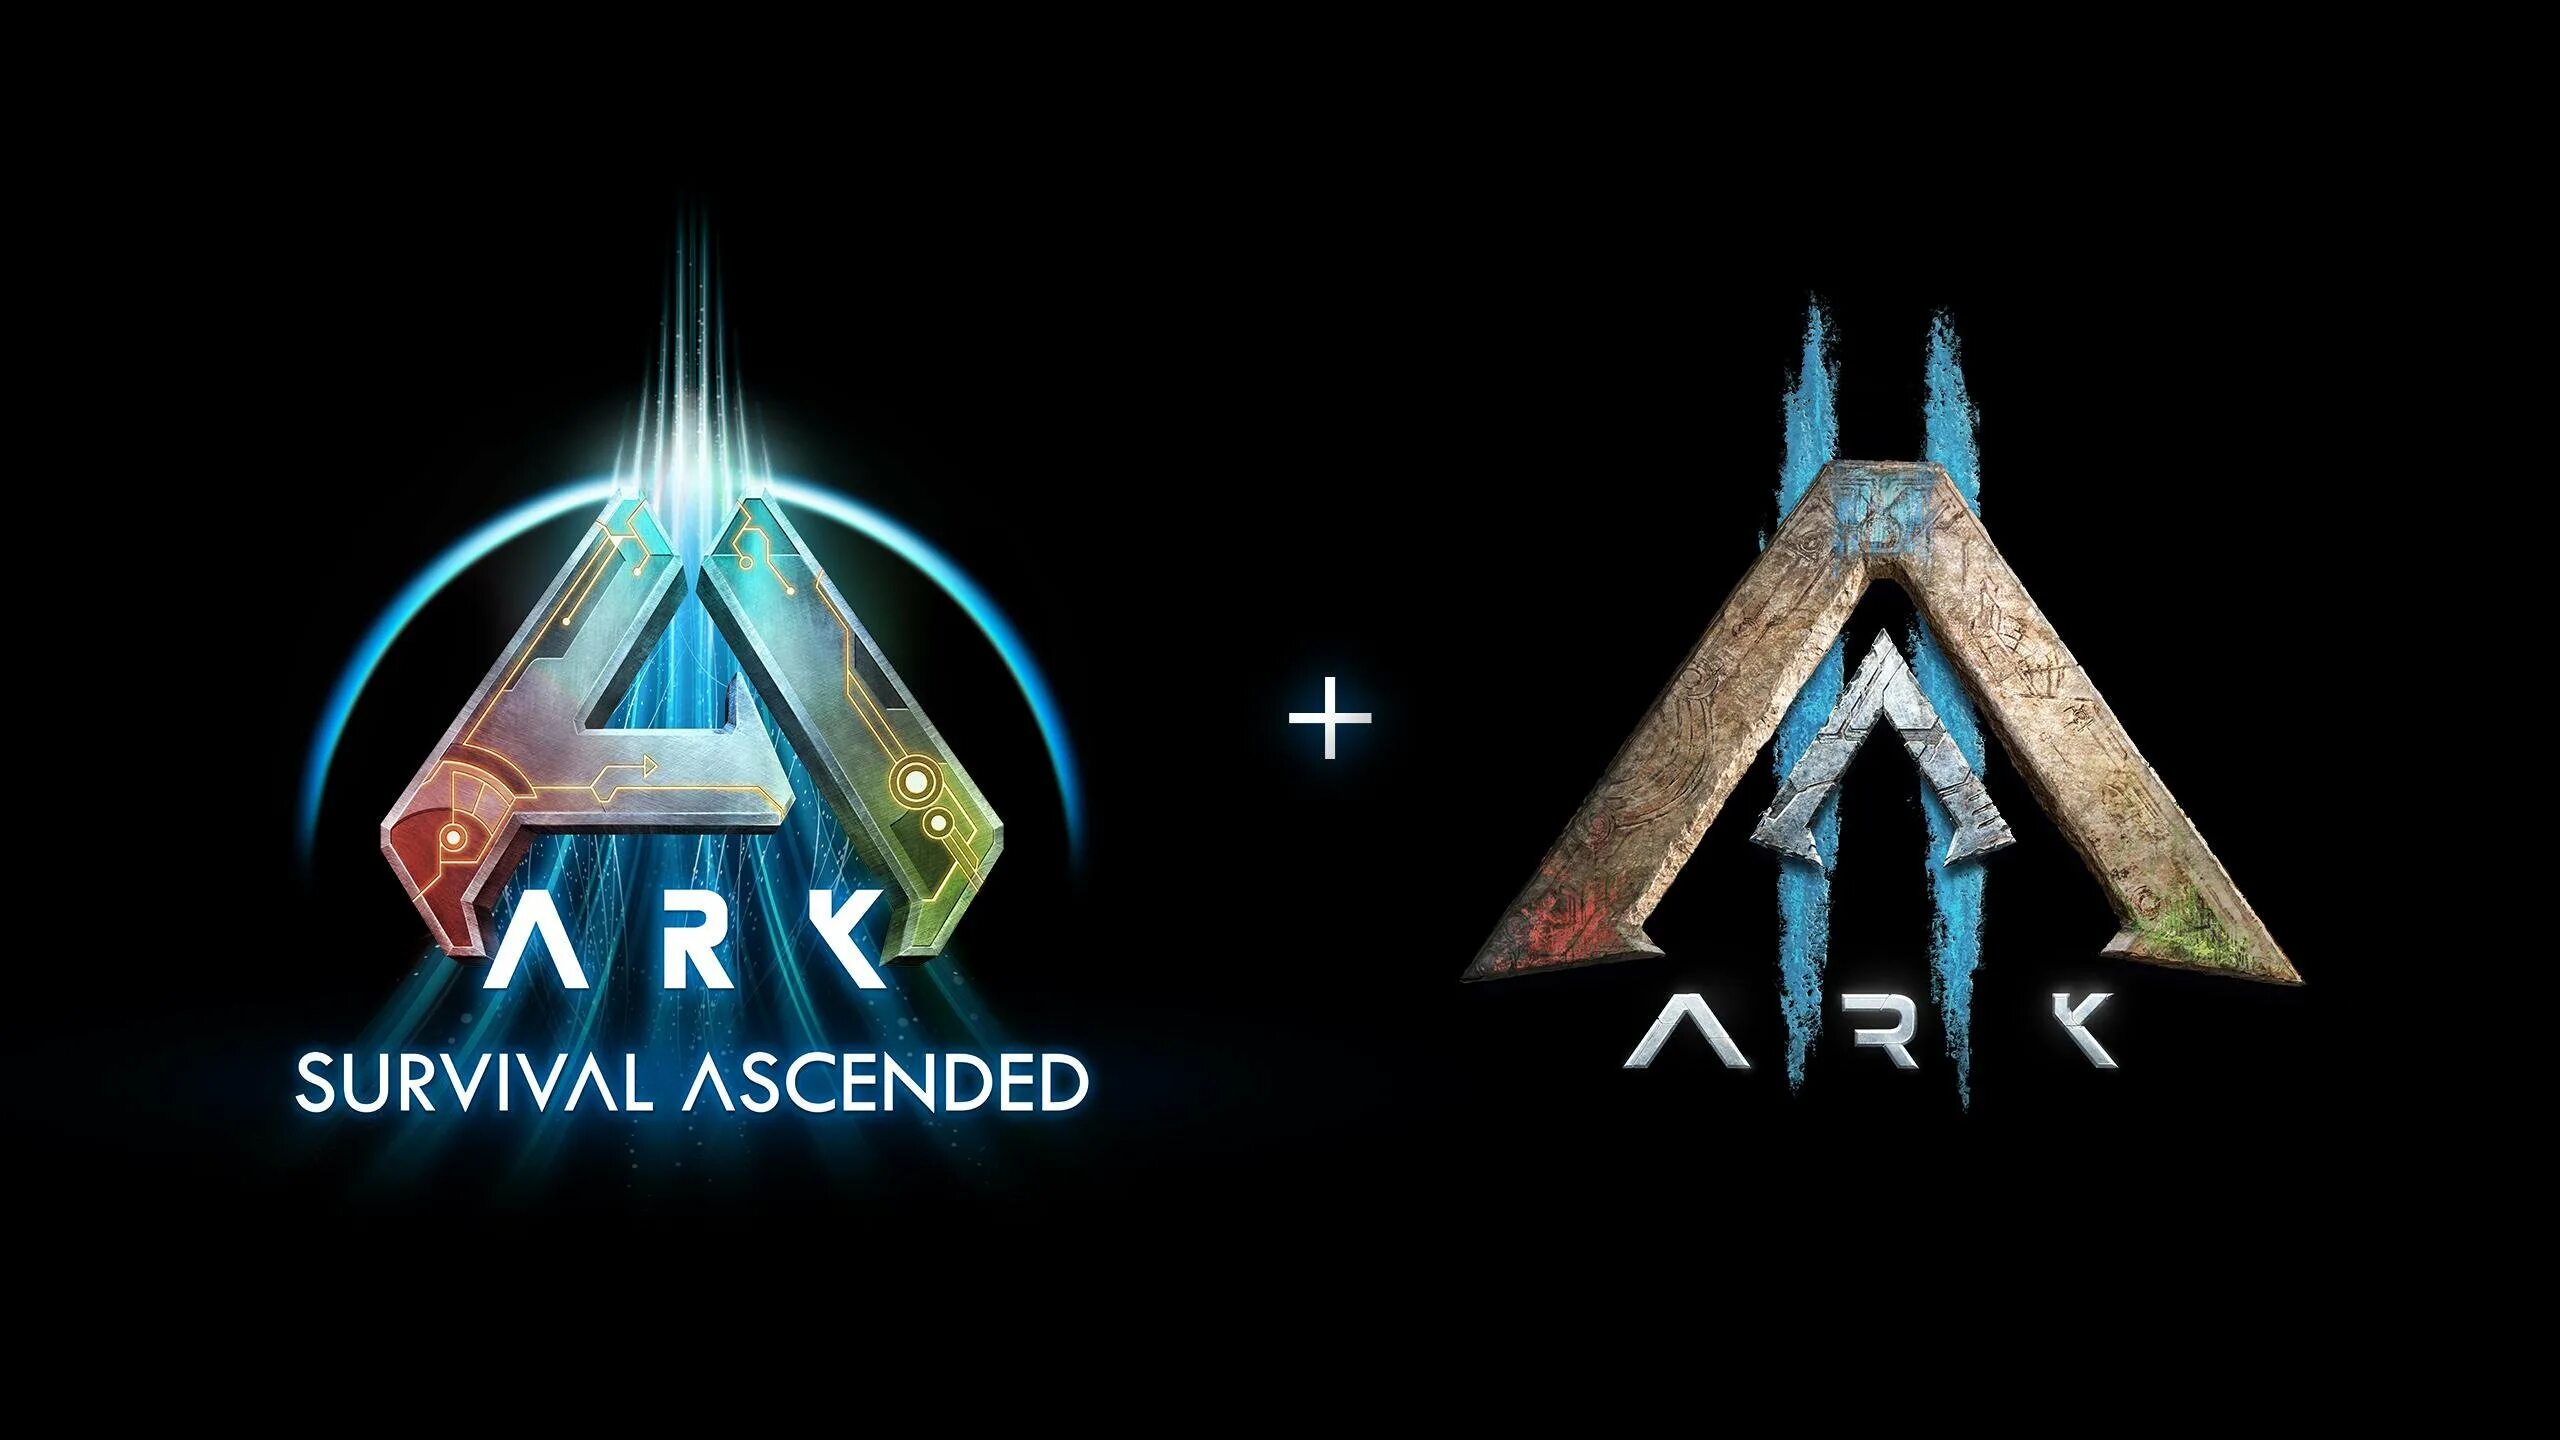 АРК Ascended. Игра Ark 2. Ark Survival Ascended фото. Ark: Survival Ascended лого. Ark ascended карта